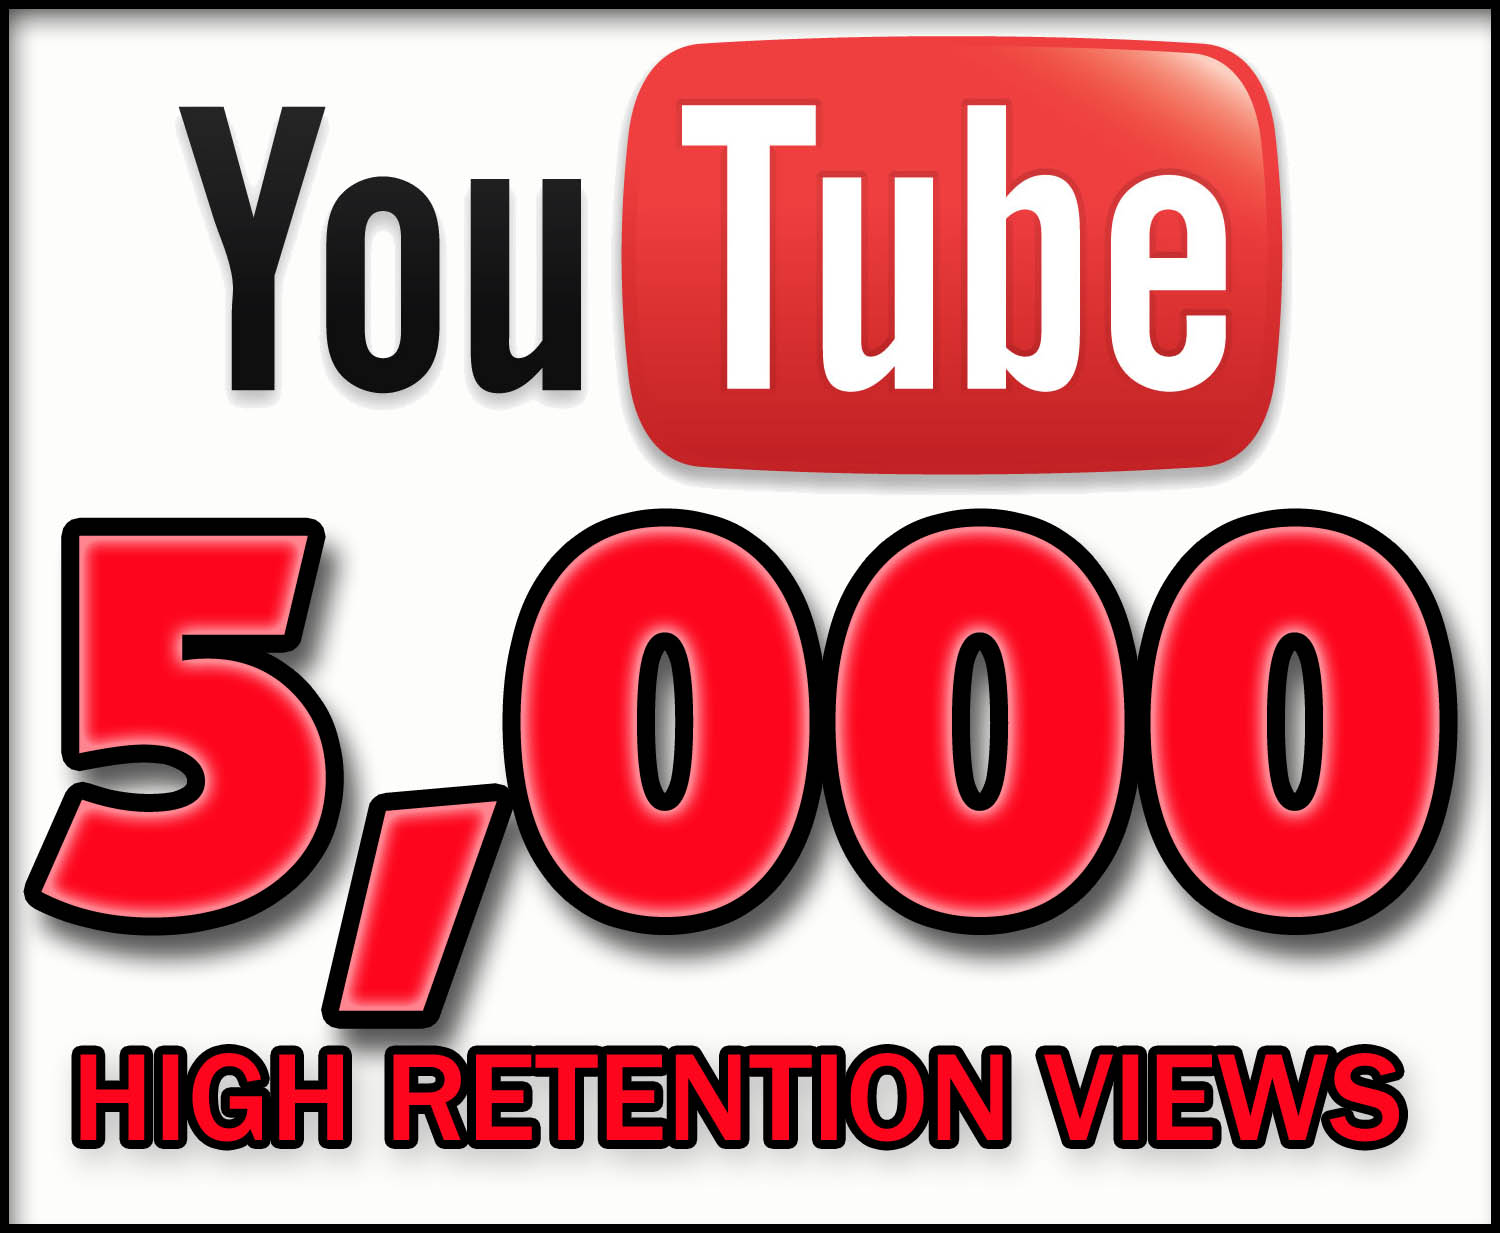 Safer ютуб. Retention youtube. 1,000,000 Views on youtube.